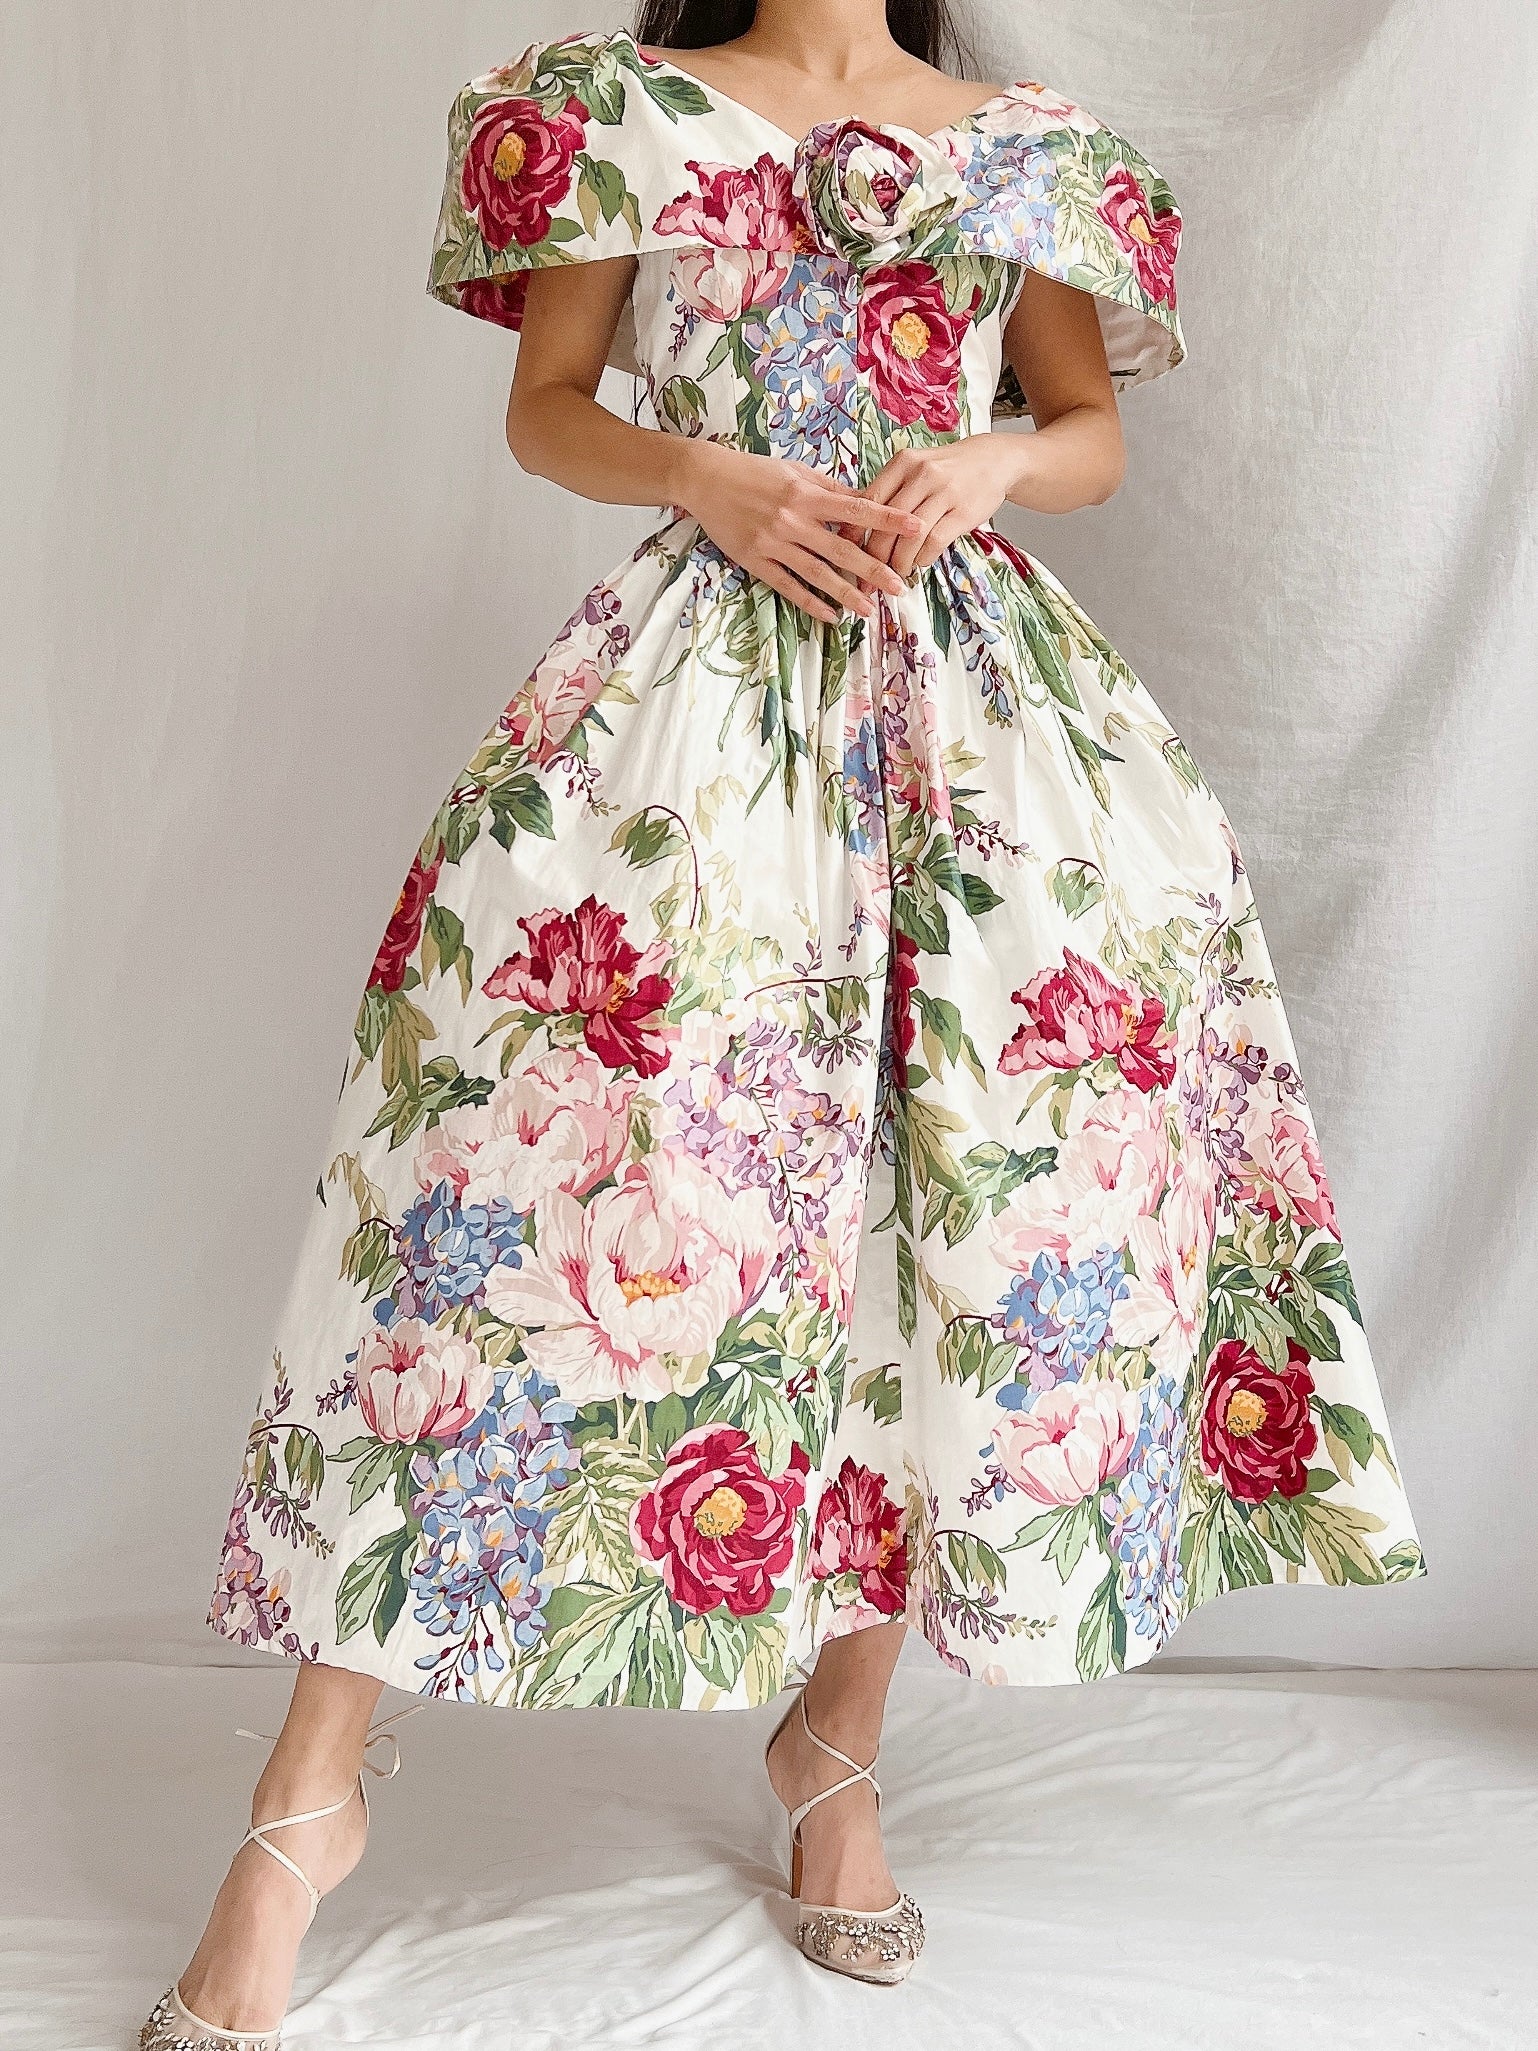 Vintage Polished Cotton Floral Dress - XS